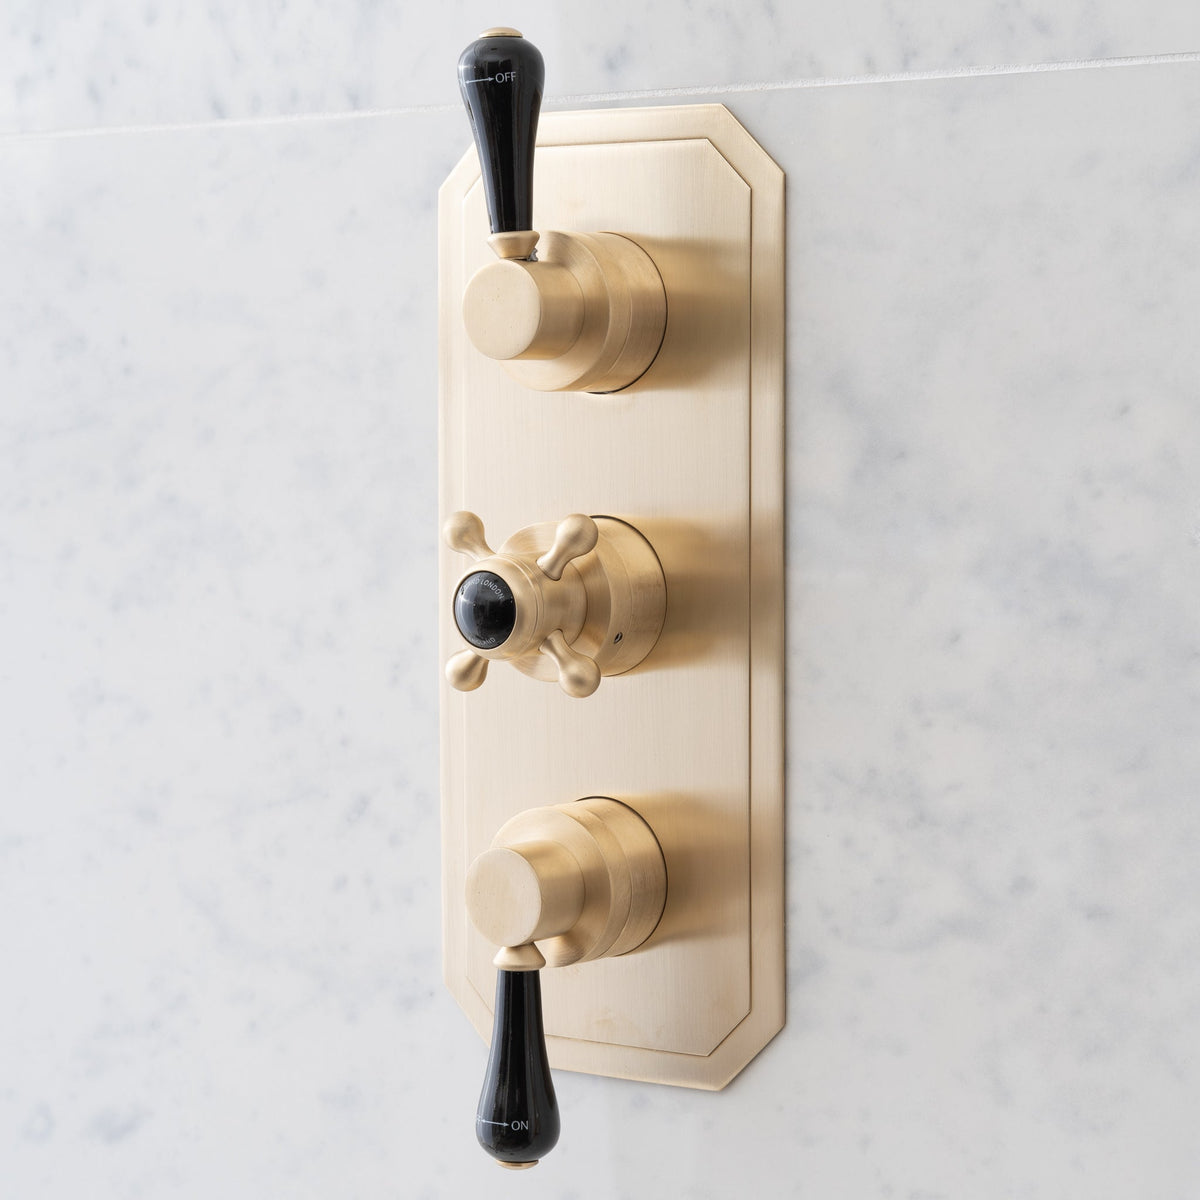 Thornton Black Ceramic Lever &amp; Cleaver Telephone Handset Concealed Thermostatic Shower Set - Rutland London (USA)